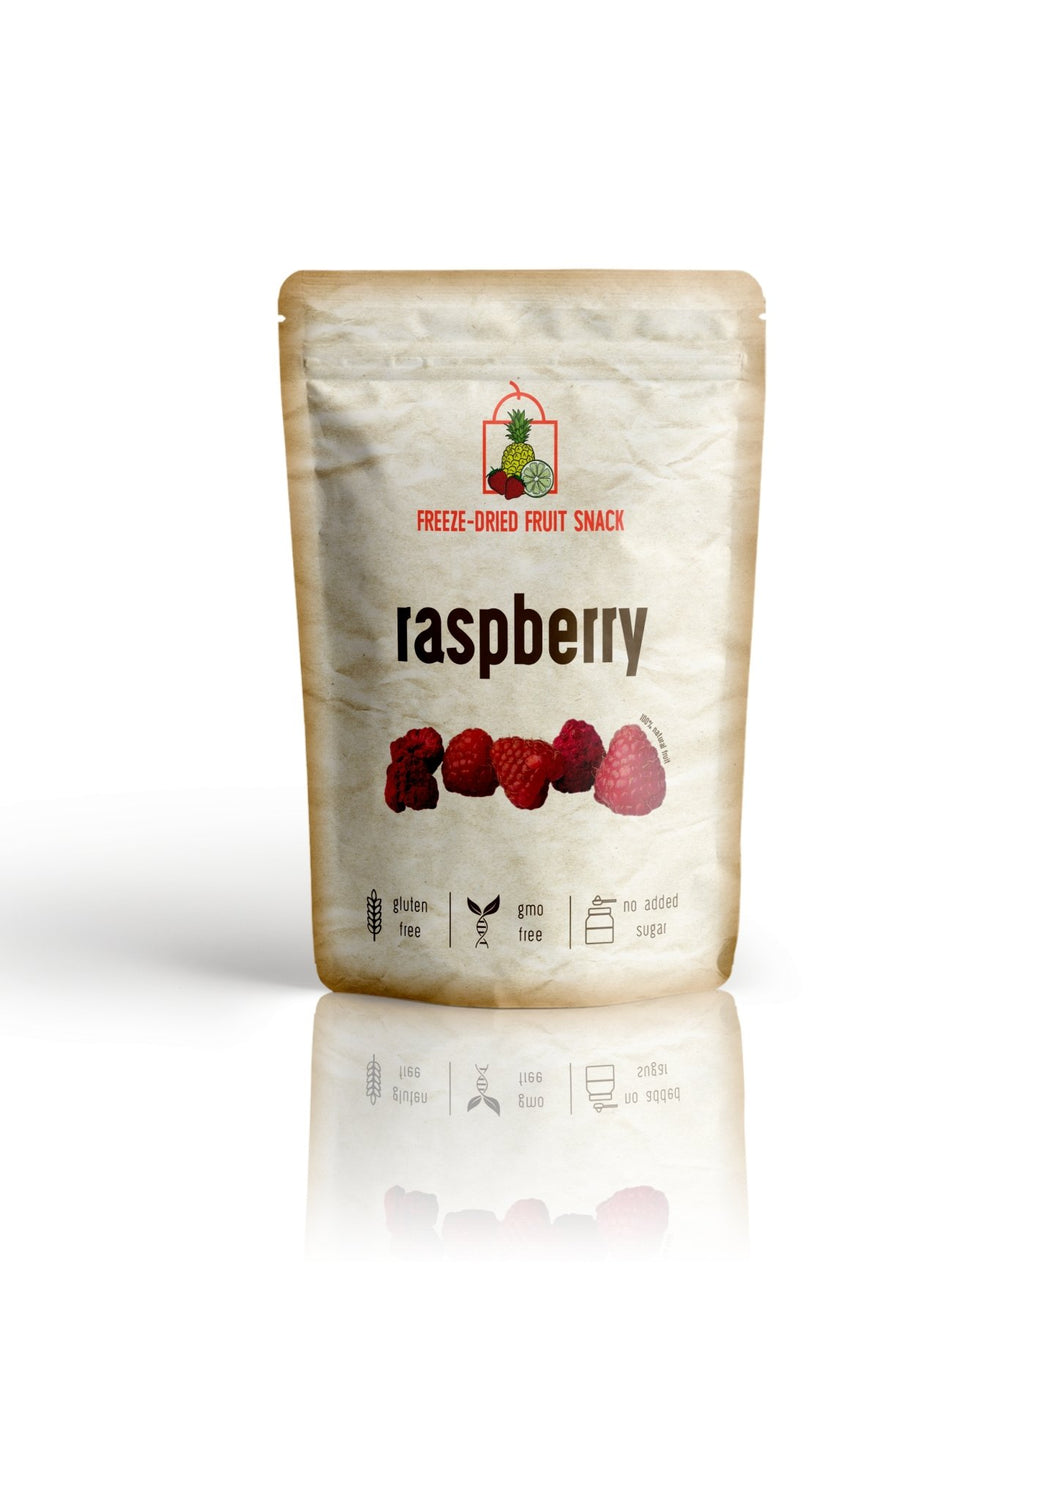 The Rotten Fruit Box - Freeze Dried Raspberry Snack by The Rotten Fruit Box - Farm2Me - carro-6366991 - 5600811500031 -